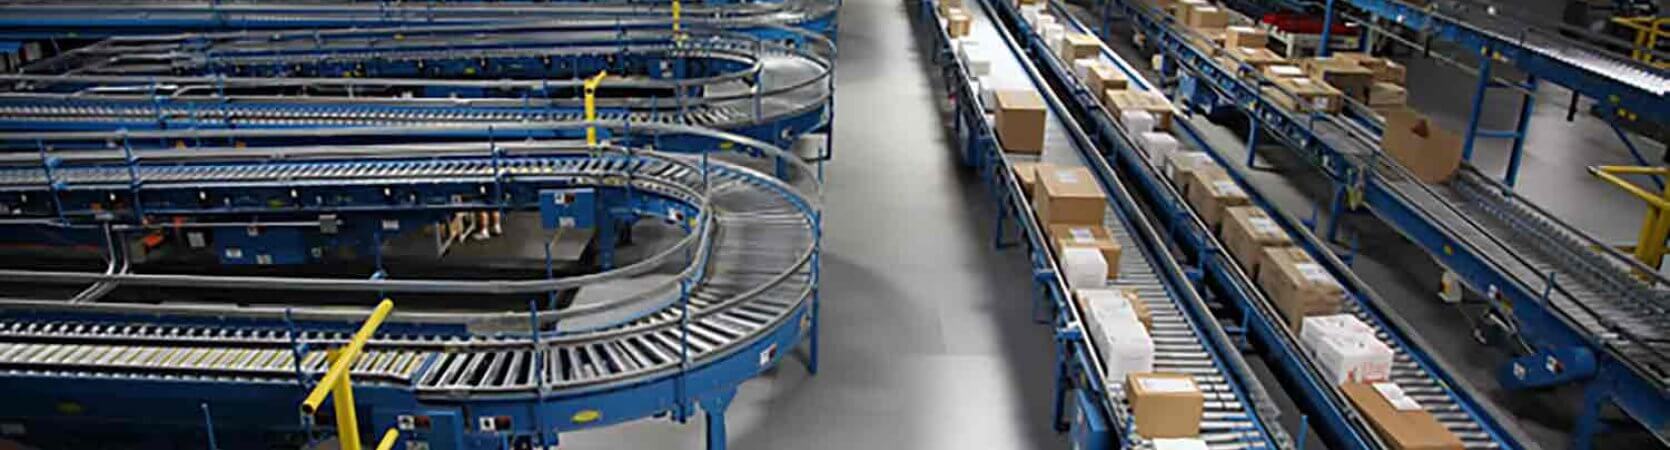 new automation parcel conveyor system design